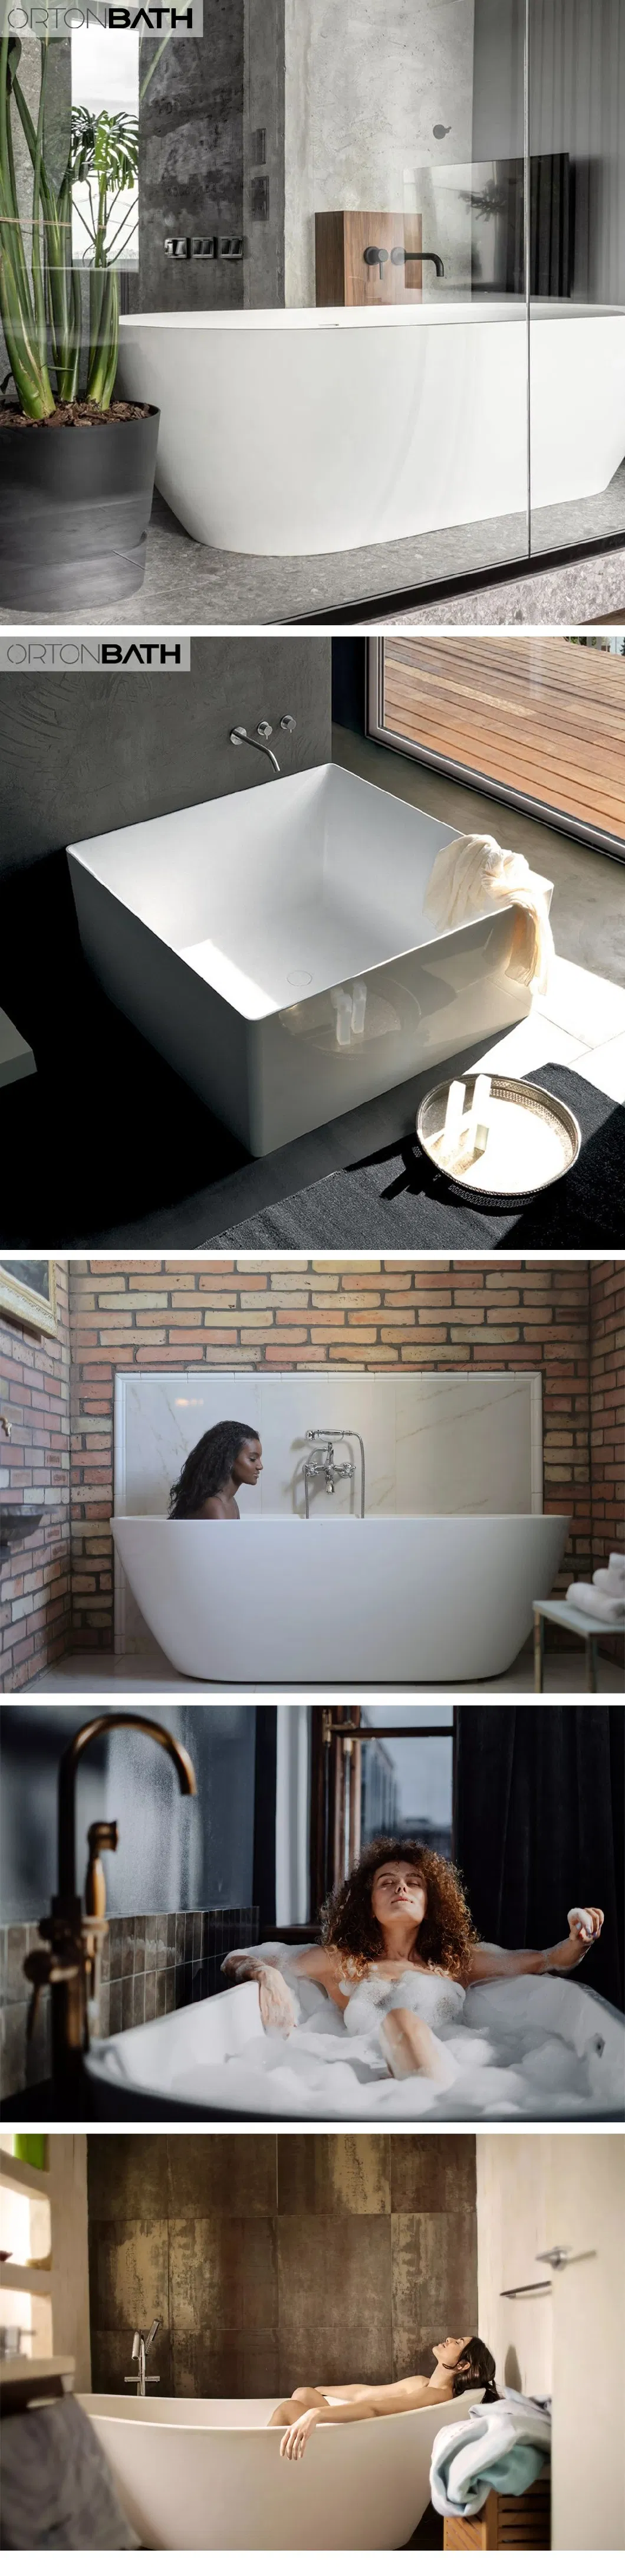 Ortonbath Adult Acrylic Freestanding Hot Swim SPA Bathtub Bath Tub Freestanding Plastic Sanitary Ware Soaking Bathtub for 2 Person